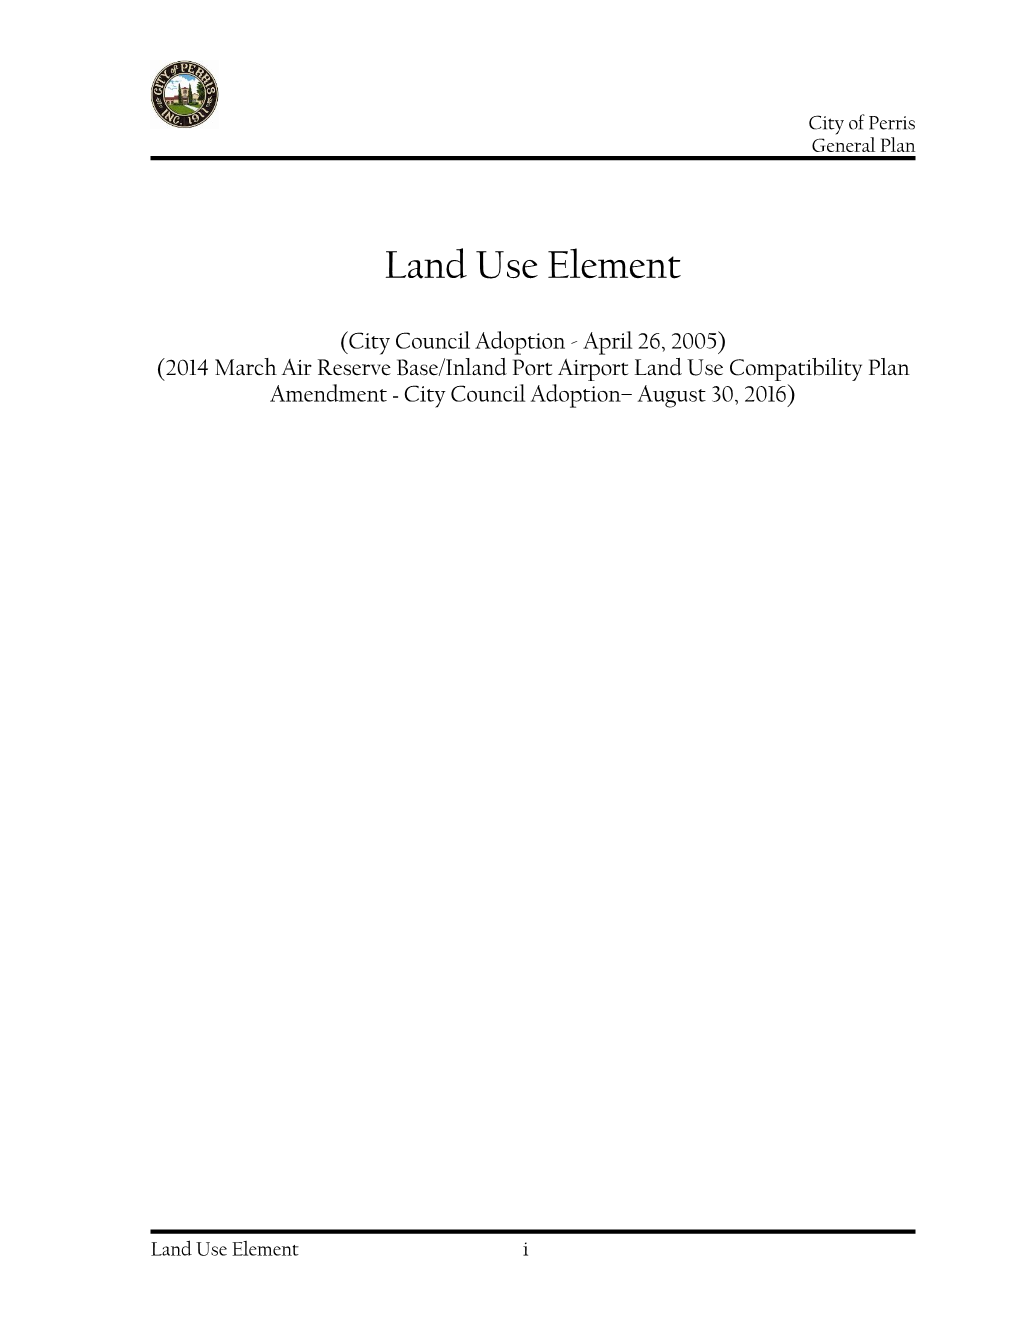 Perris General Plan Land Use Element